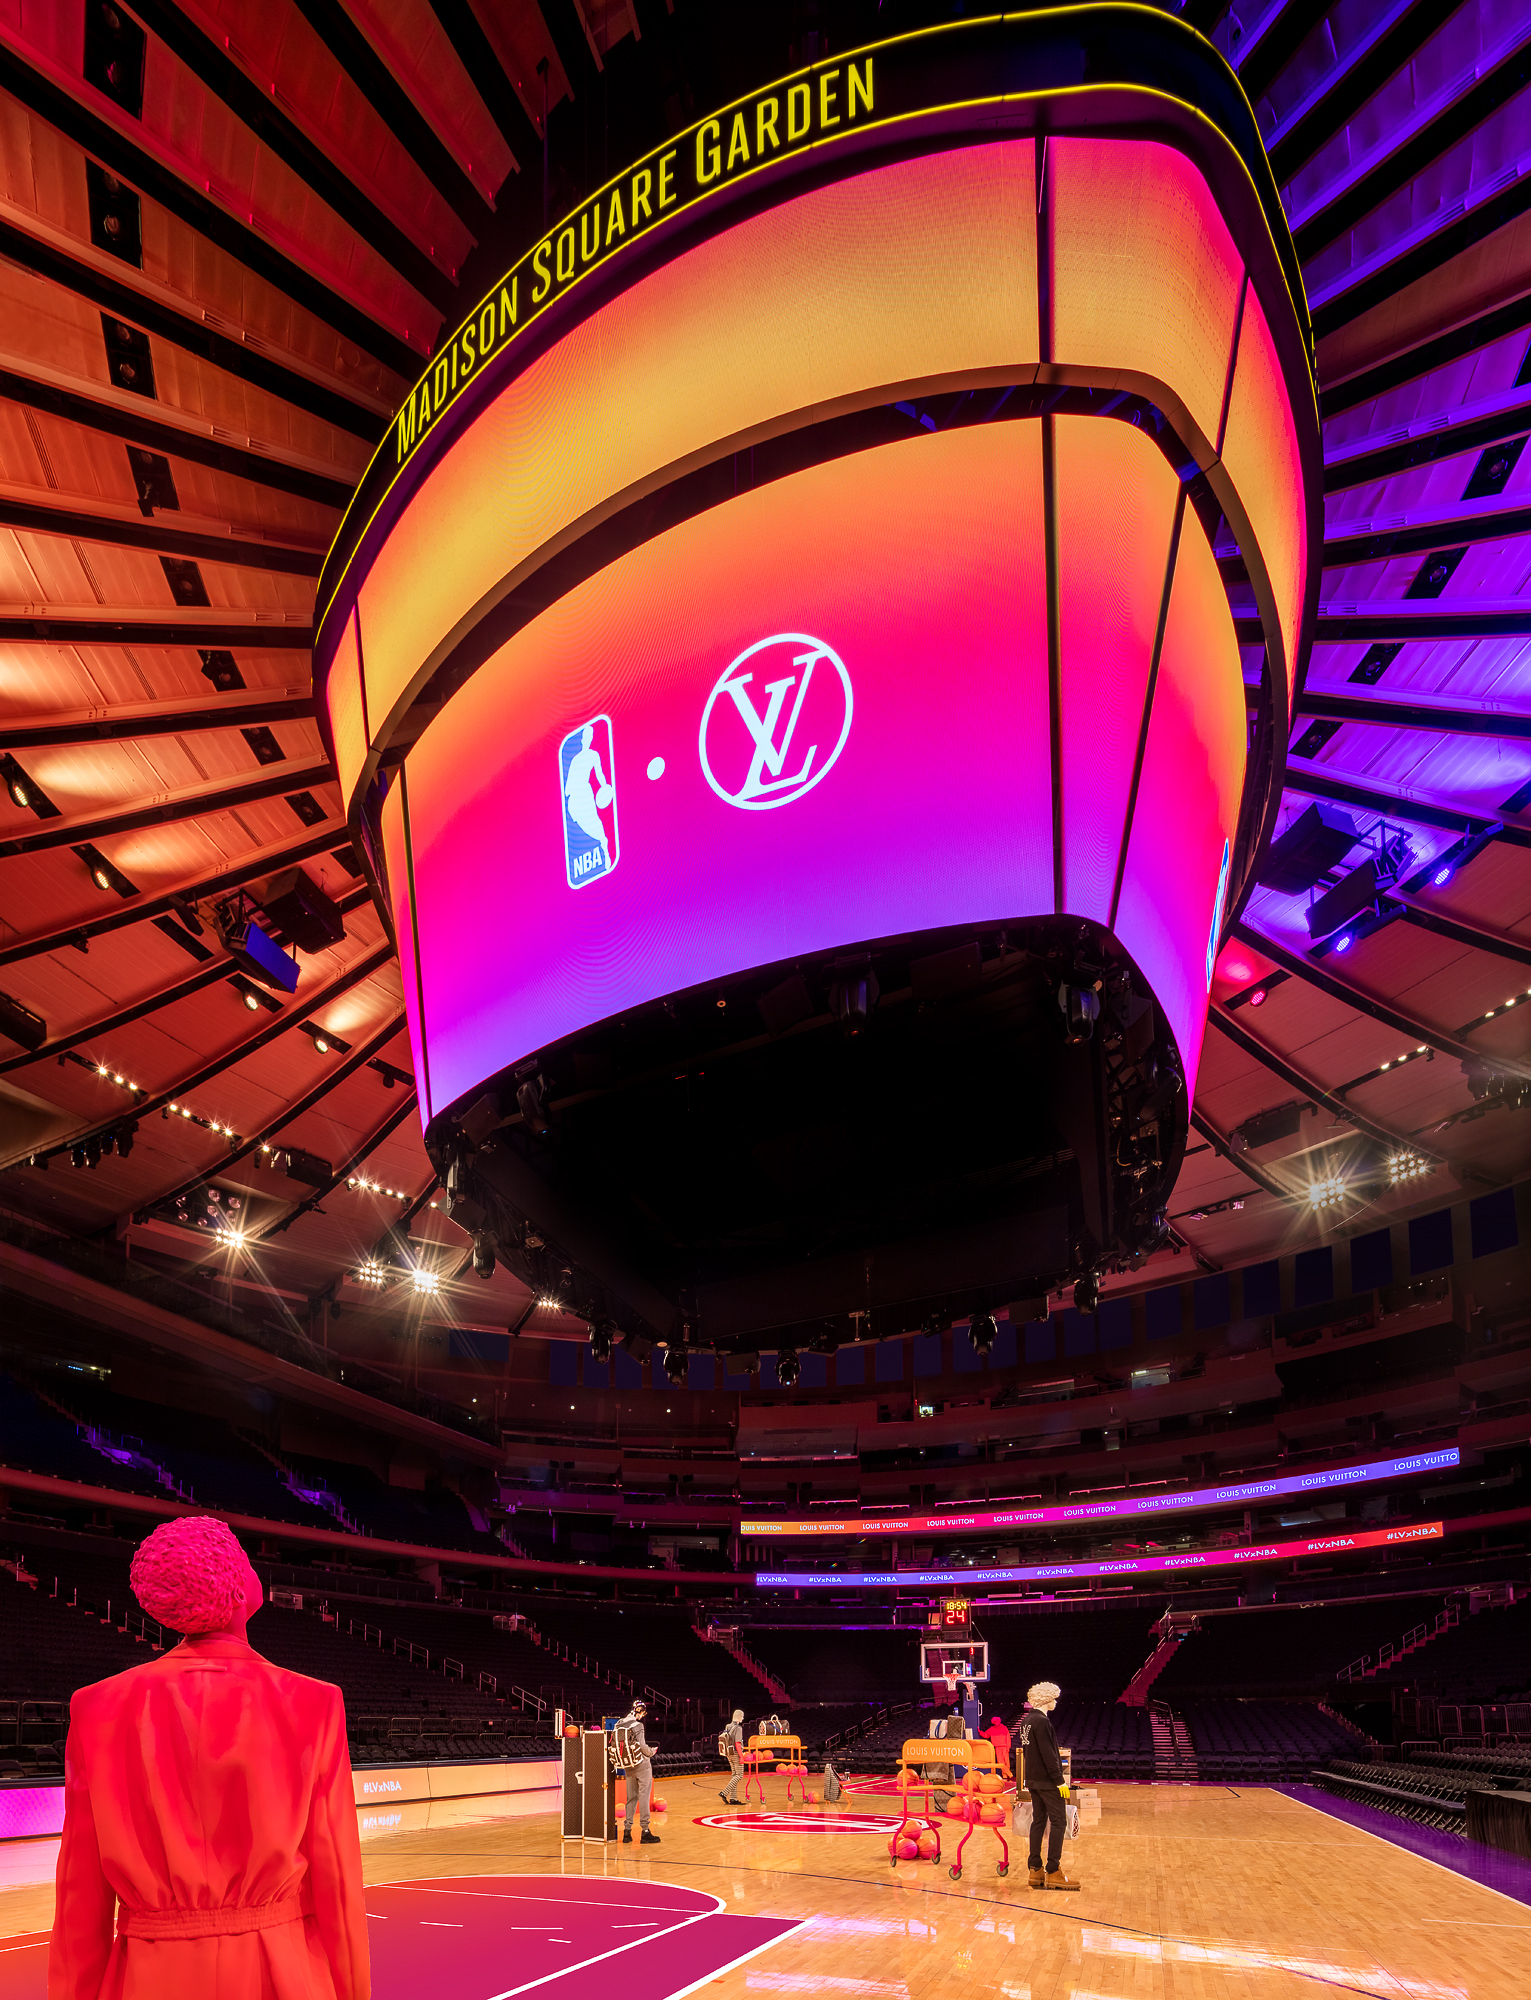 Behold: The Louis Vuitton x NBA Collaboration, LVxNBA